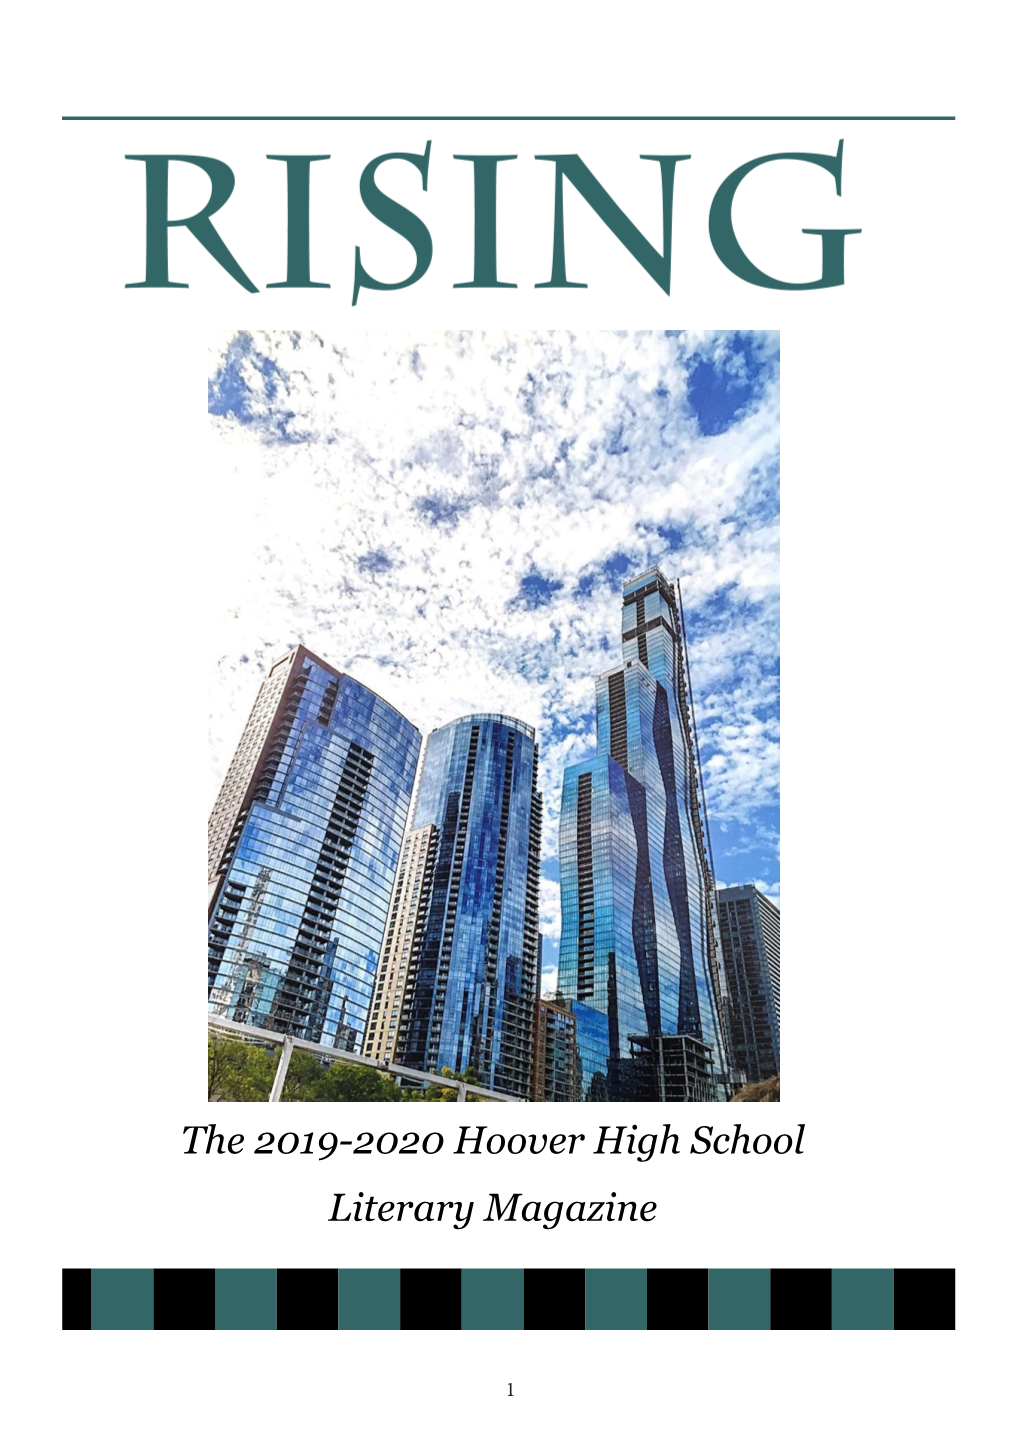 The 2019-2020 Hoover High School Literary Magazine